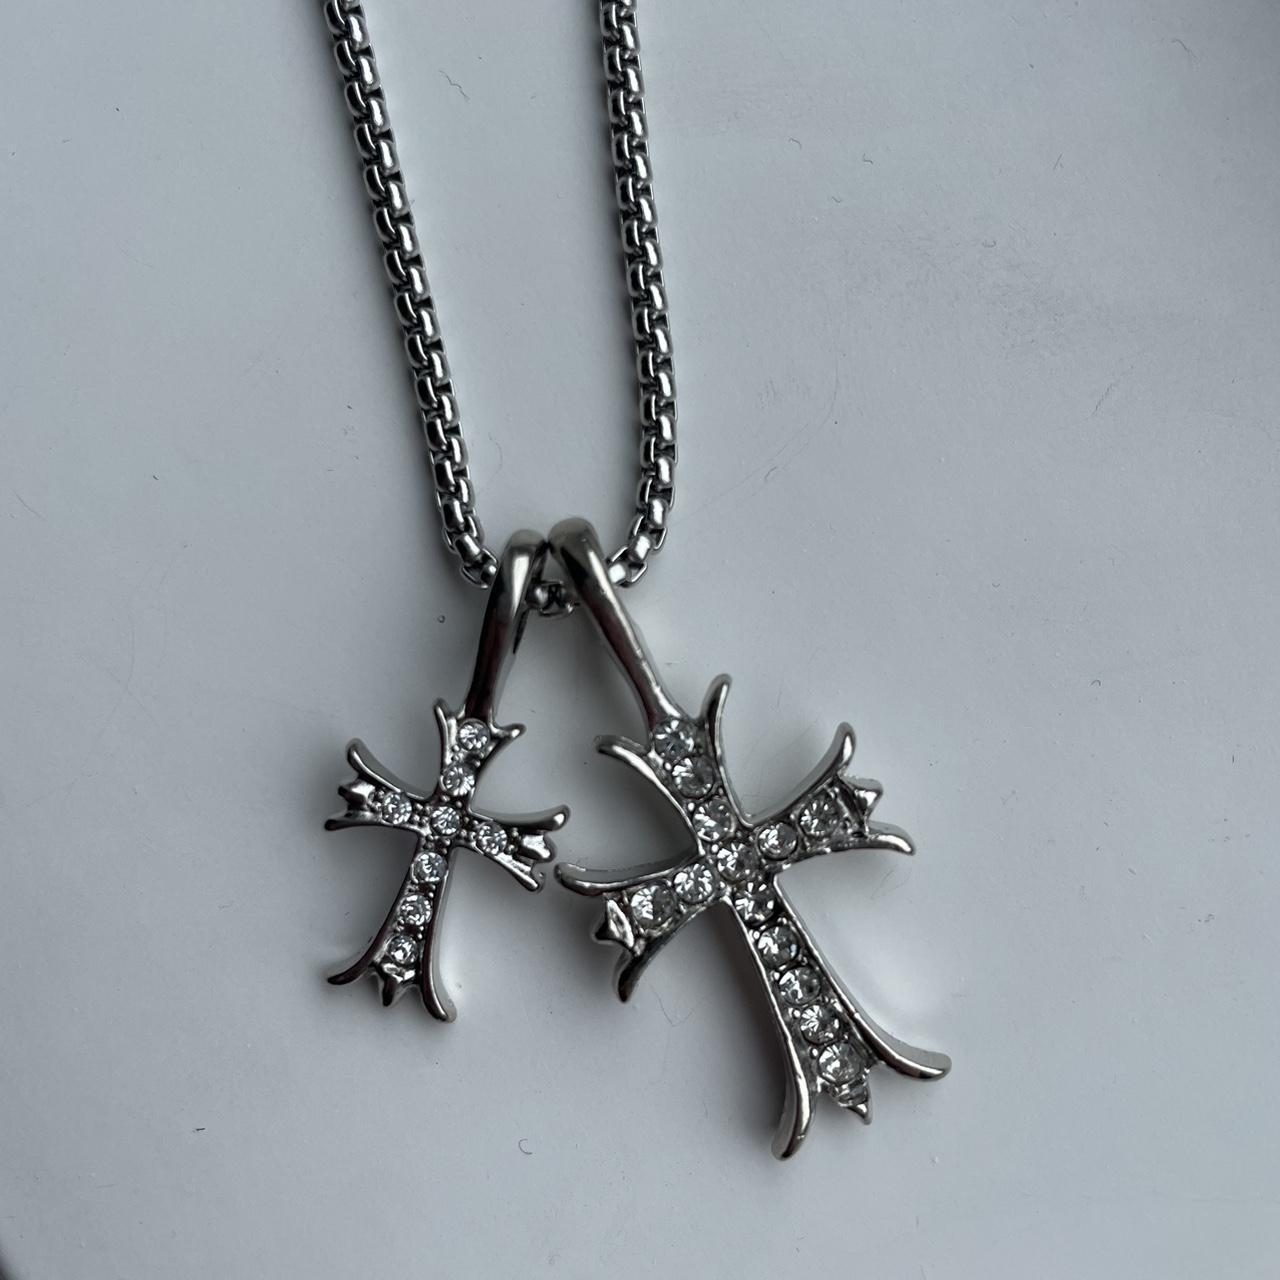 Silver Double Crucifix/Cross Chain opium... - Depop